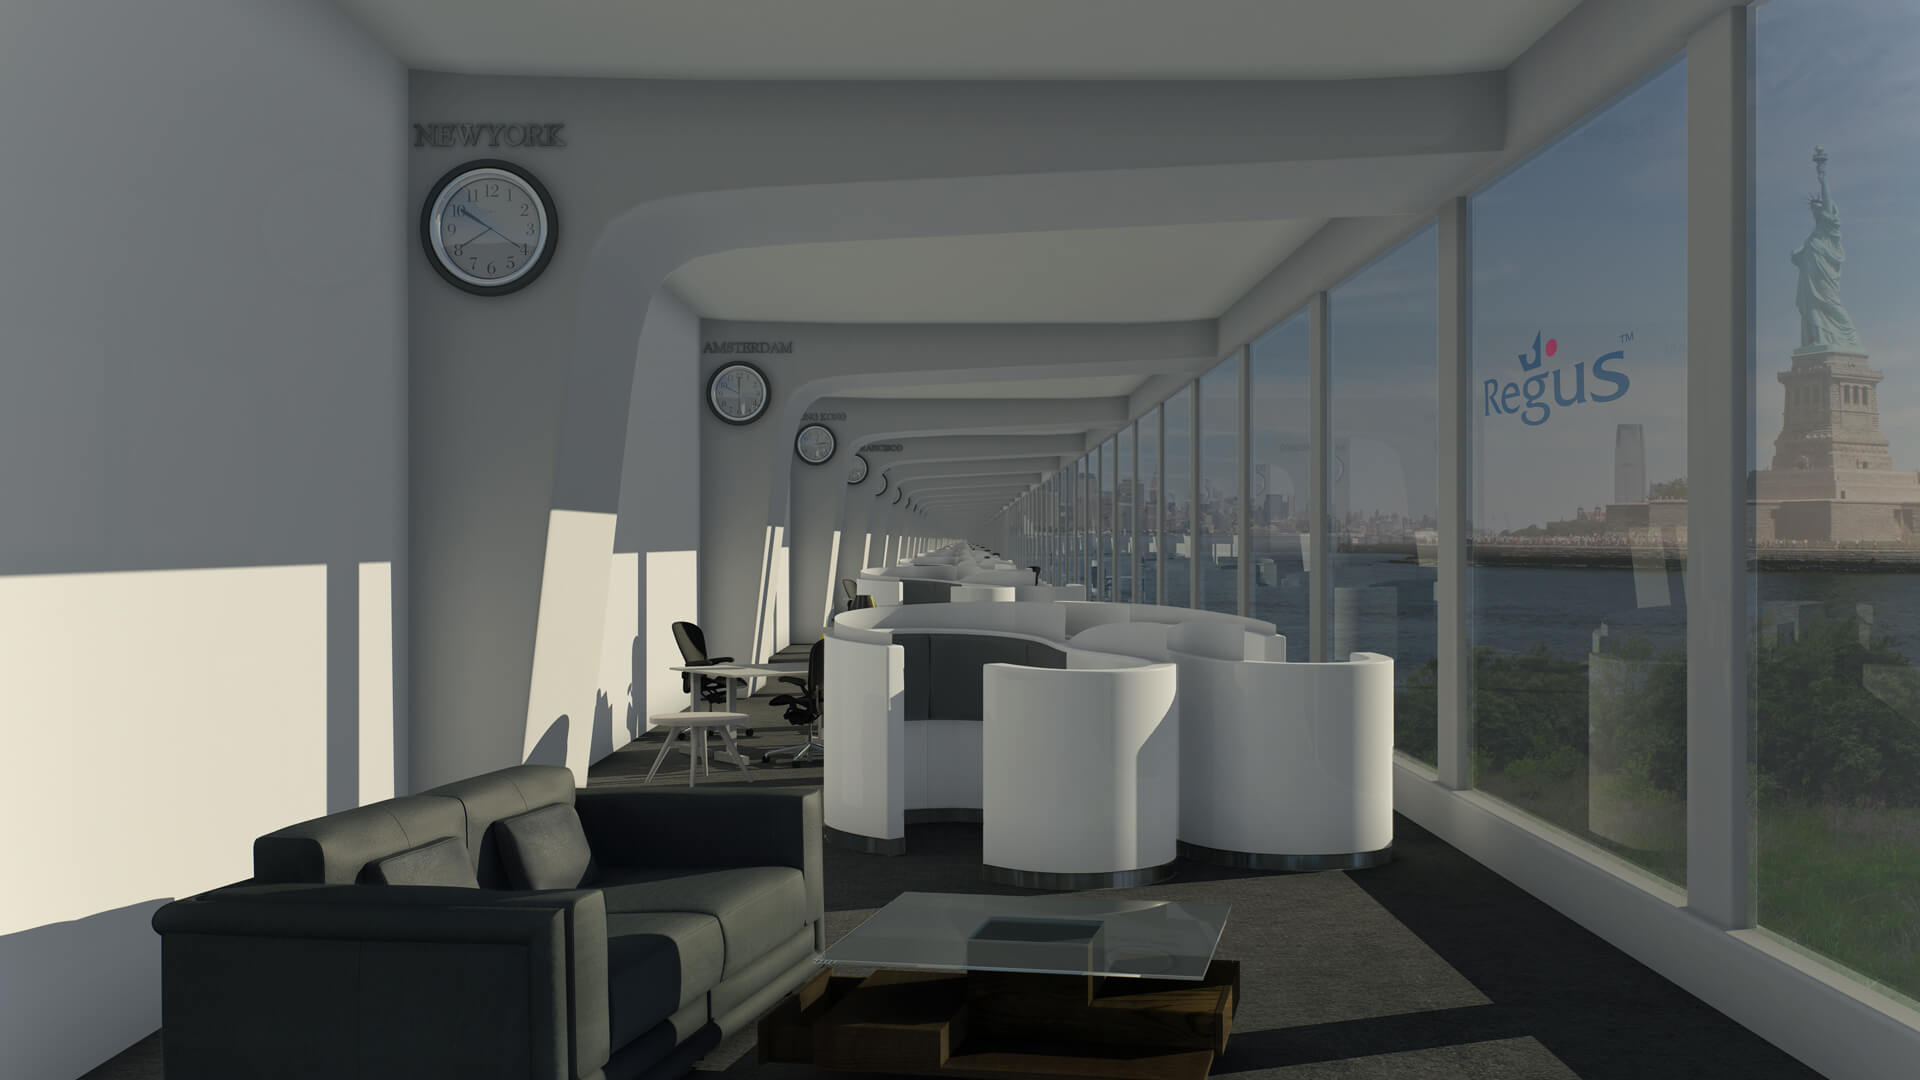 3D Architectural Visualisation for Regus Corporate Office, srushti creative